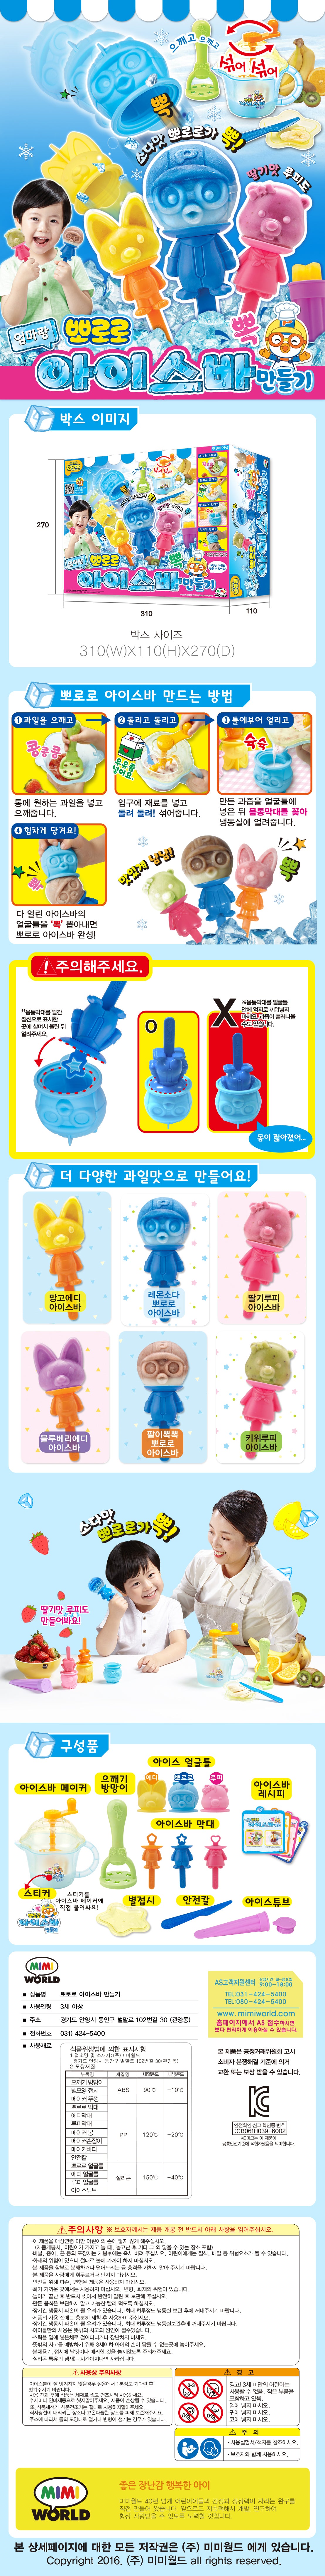 Korean Toy 😊 엄마랑 뽀로로 아이스바 만들기 Pororo Ice bar maker